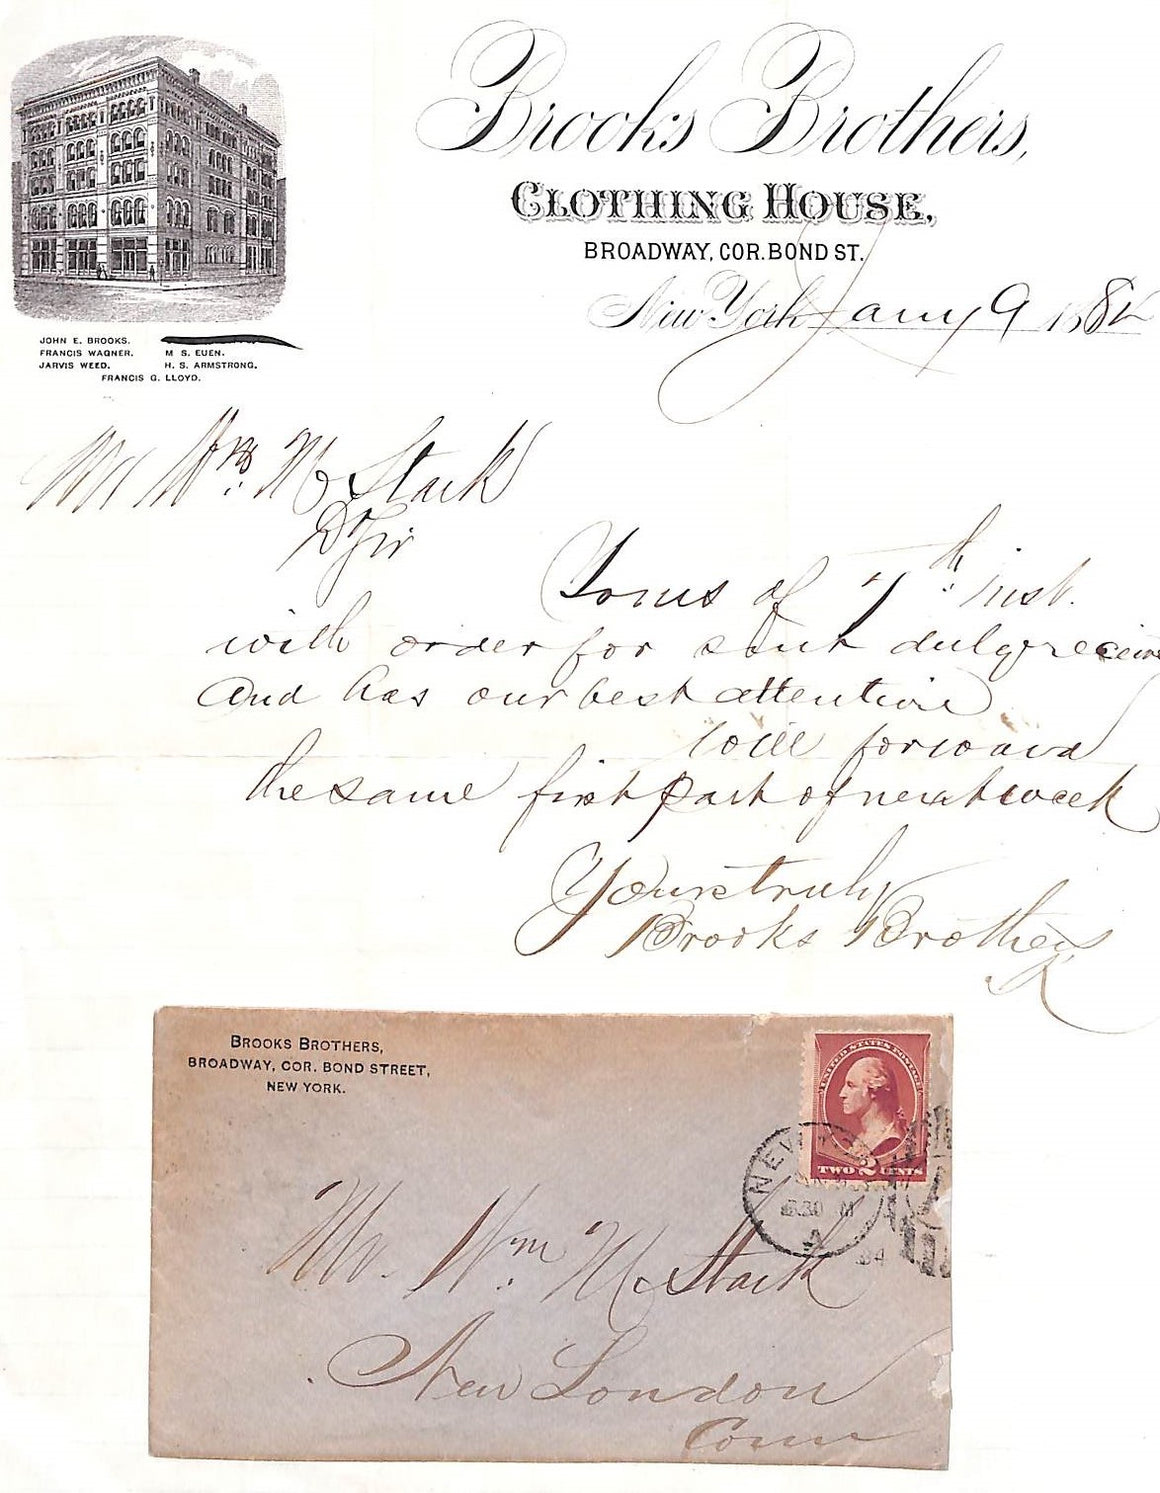 "Brooks Brothers Stationery & Envelope" January 9 1884